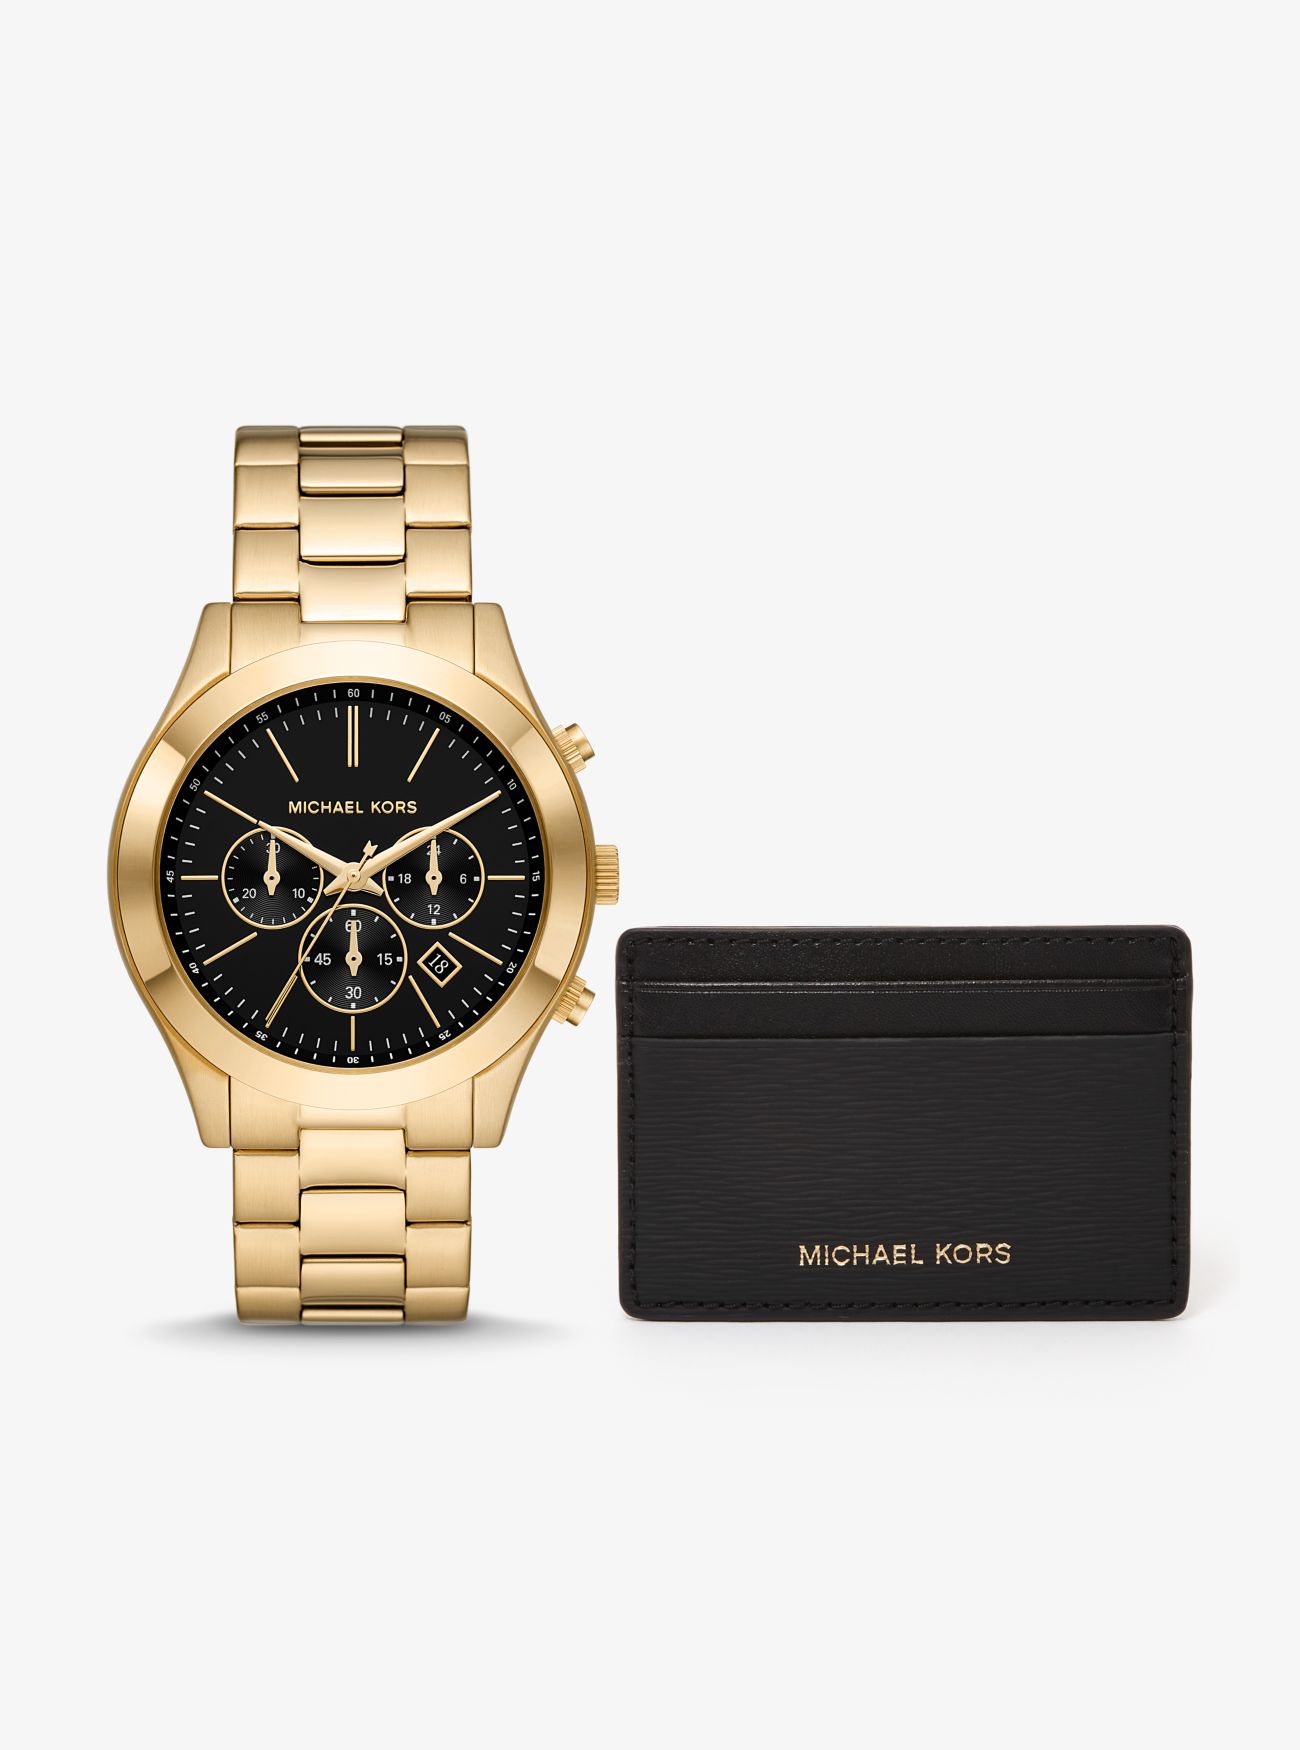 MK Oversized Slim Runway Watch and Card Case Gift Set - Black/gold - Michael Kors